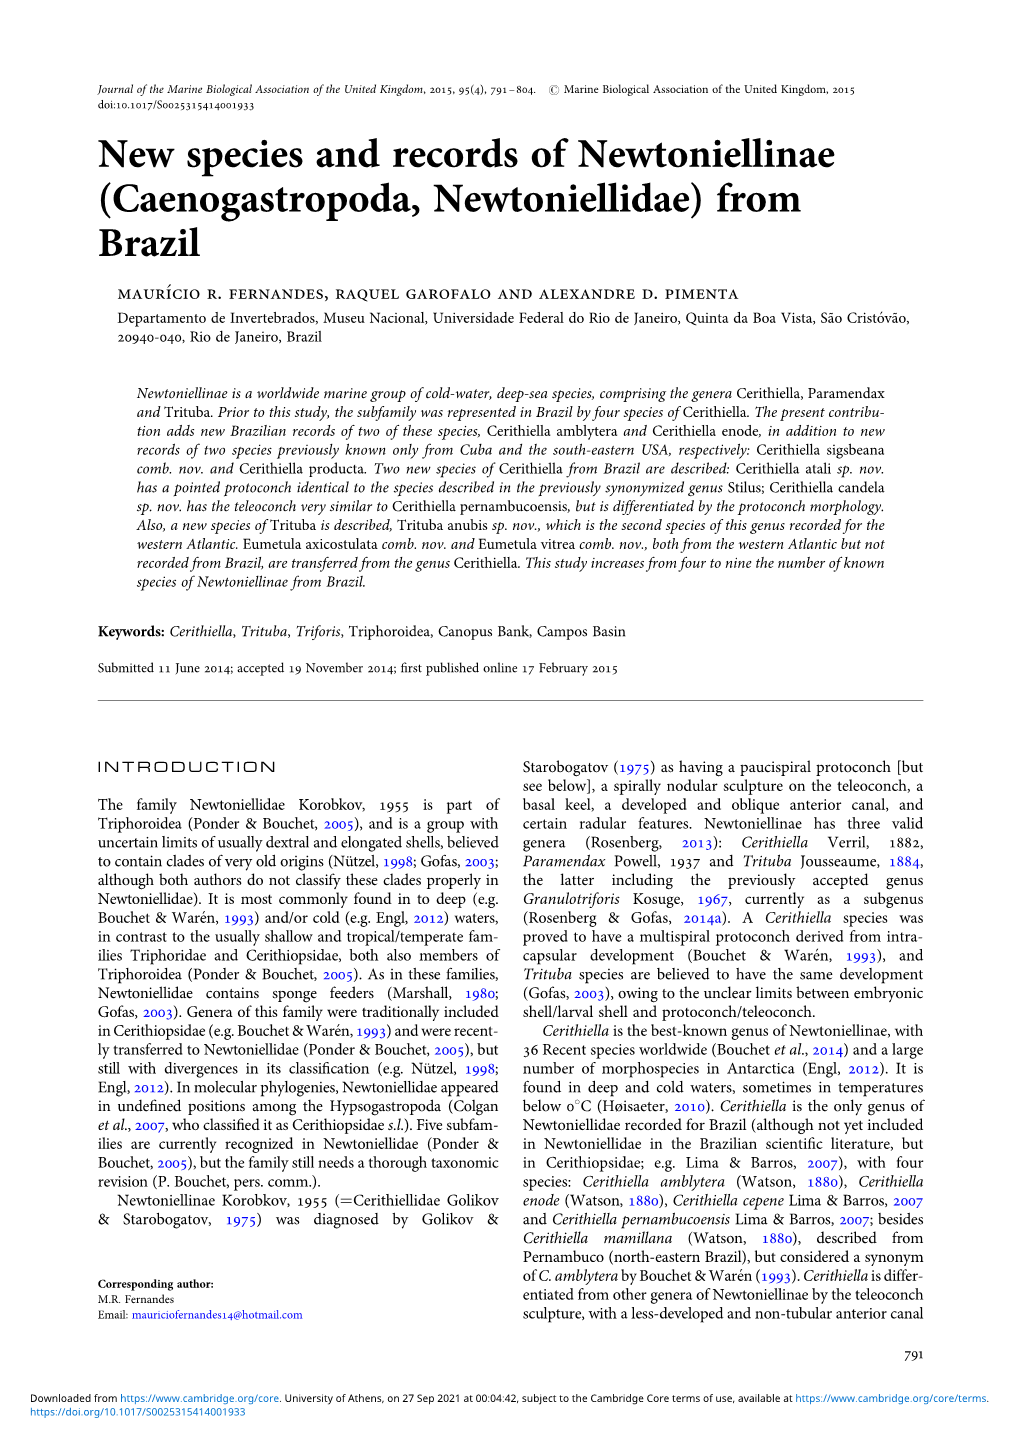 New Species and Records of Newtoniellinae (Caenogastropoda, Newtoniellidae) from Brazil Mauri’Cio R